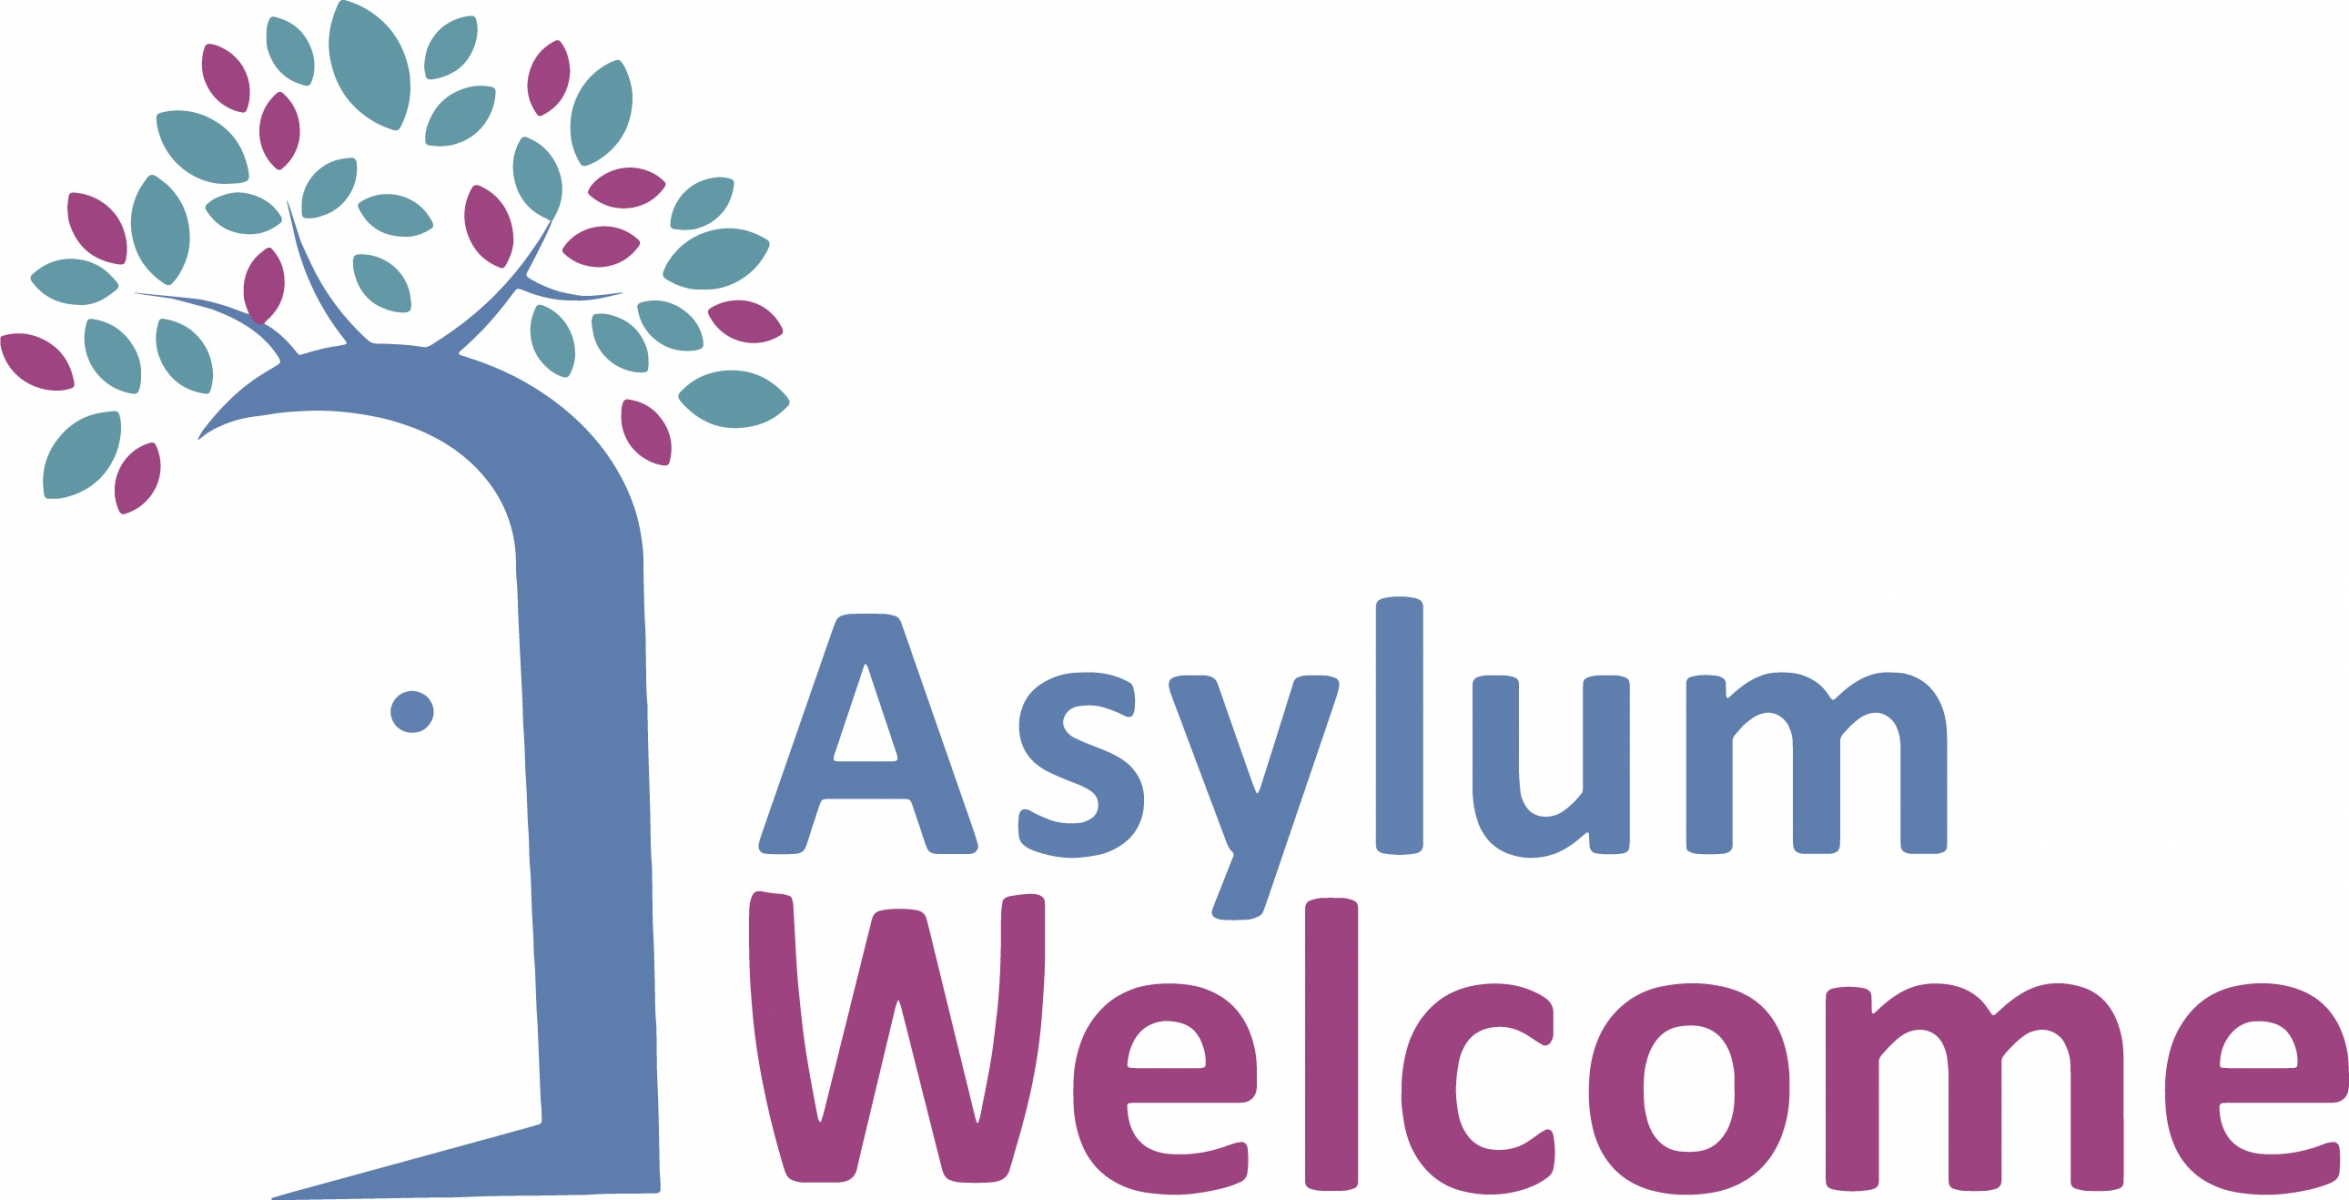 Asylum Welcome eCards